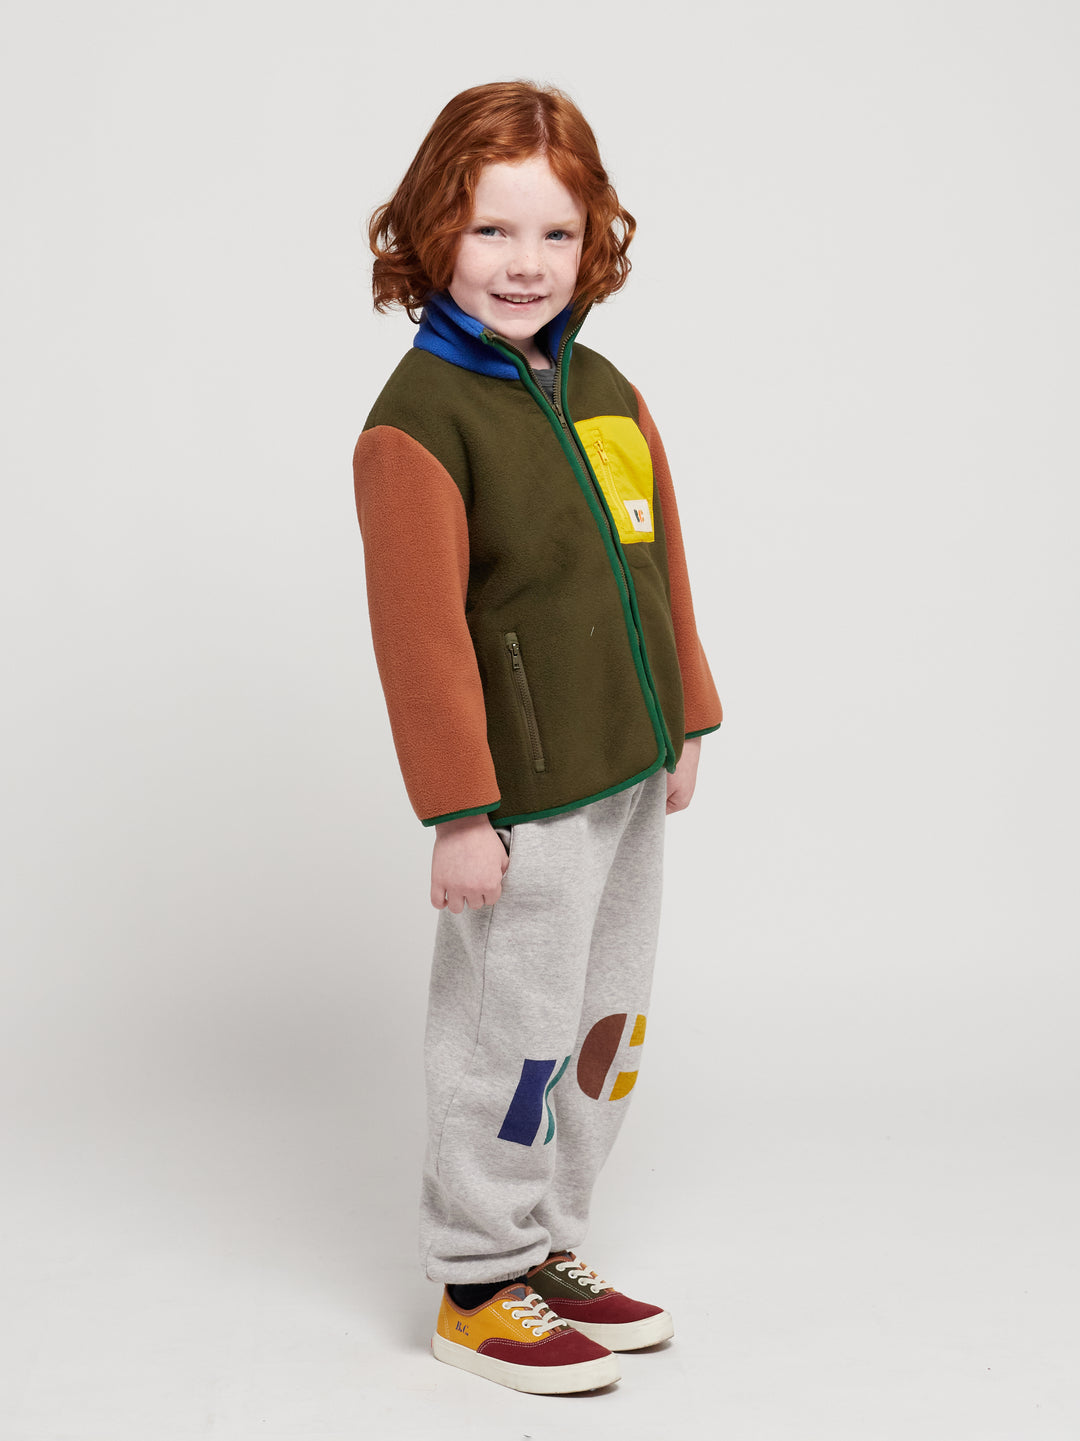 Enfant avec Veste en polaire kaki, brun, bleu, vert et jaune 